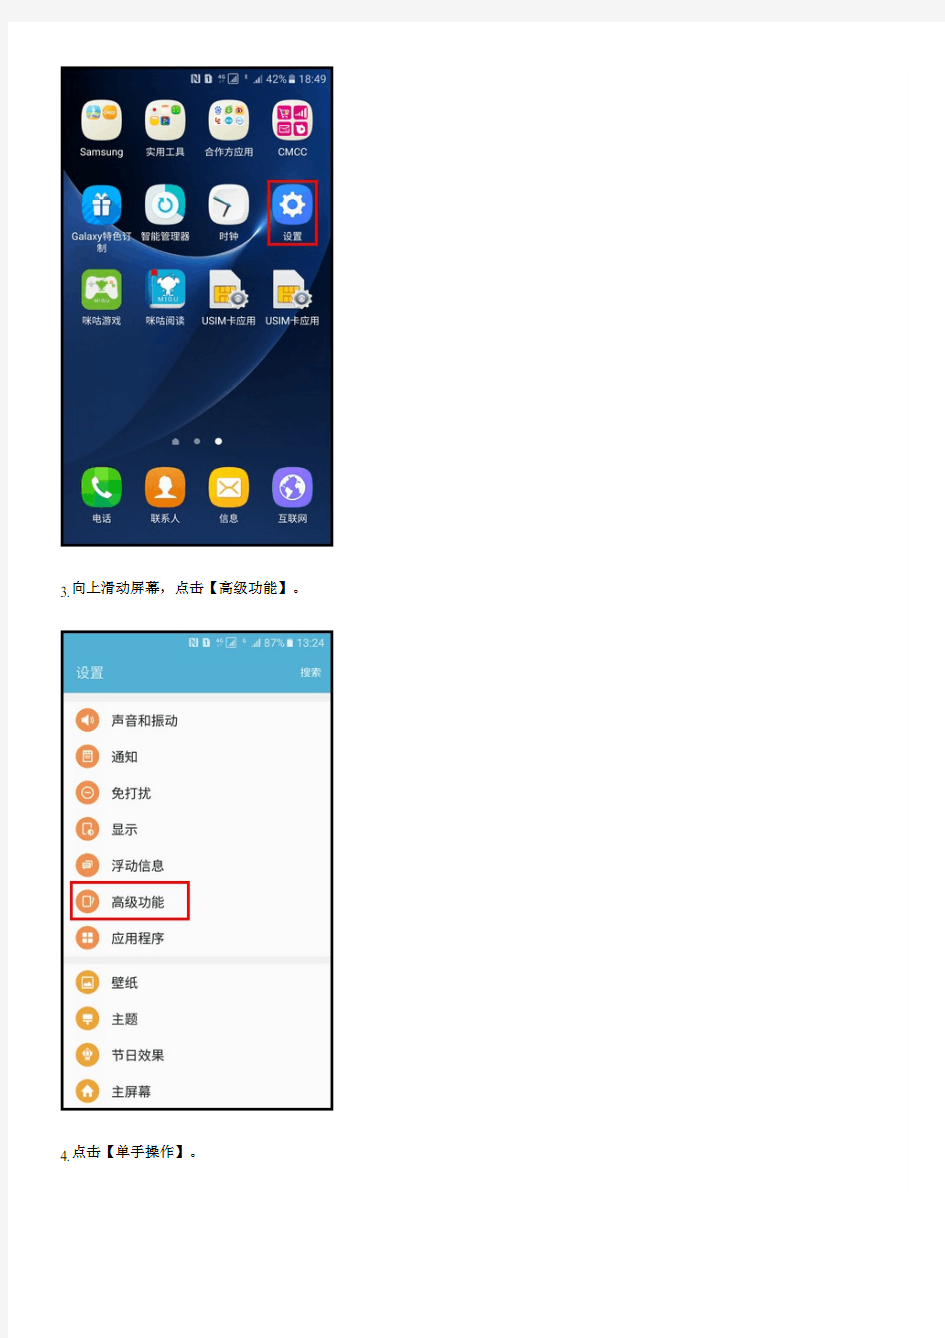 Samsung Galaxy S7 SM-G9308(6.0.1)如何使用缩小屏幕尺寸功能